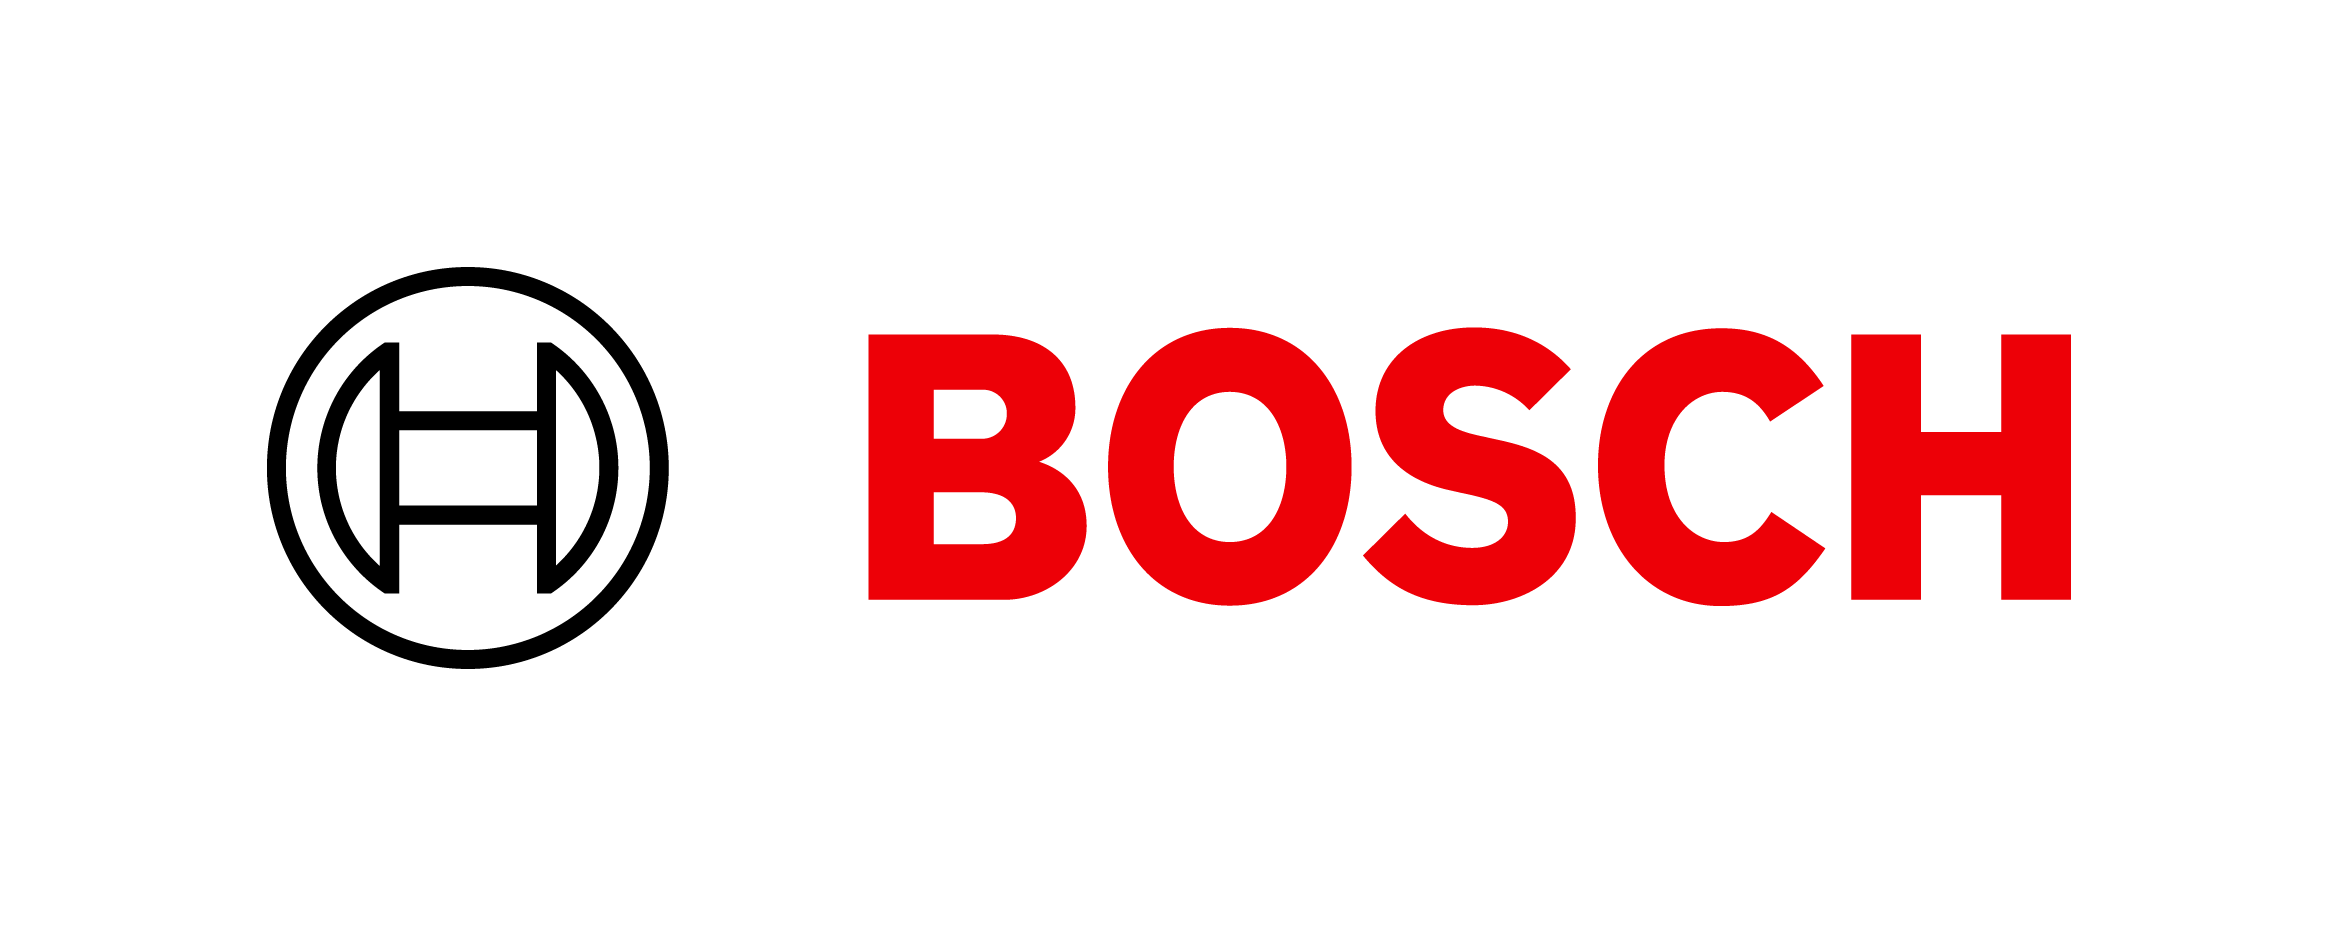 https://admin.link-io.app/files/wholesaller/Bosch_symbol_logo_black_red.png | Linkio kereső